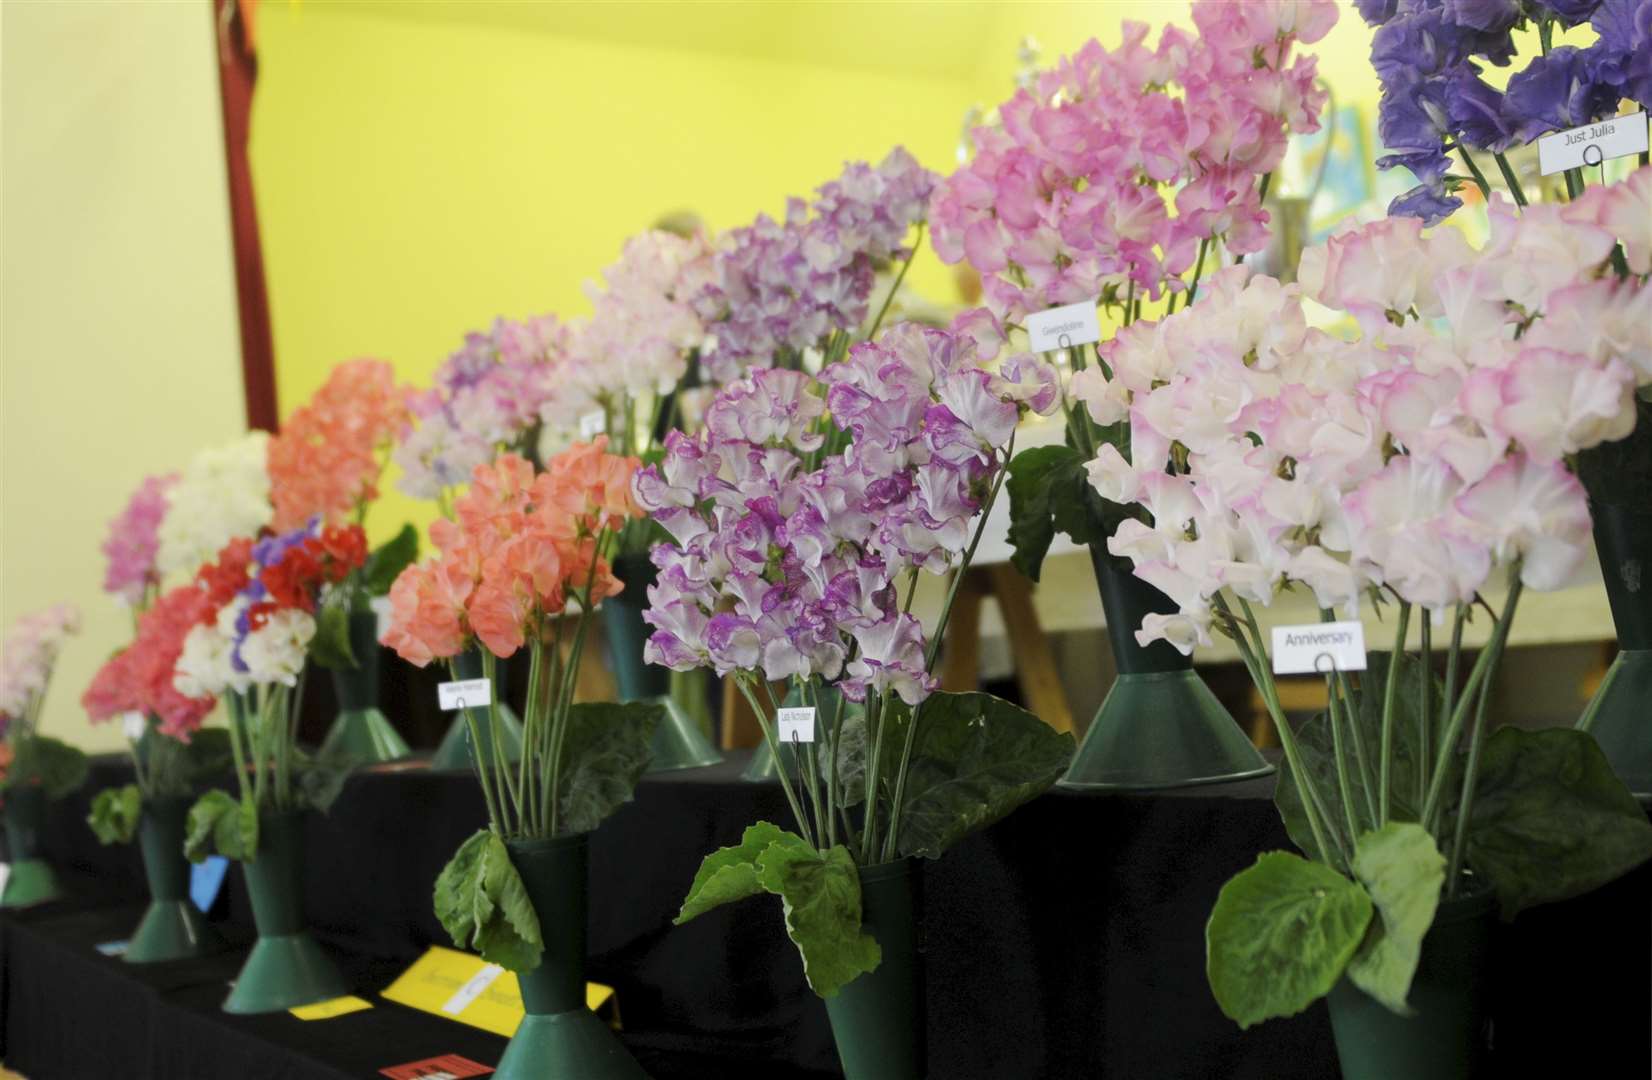 Deskford Flower Show is set to bloom again after a Covid-enforced break.